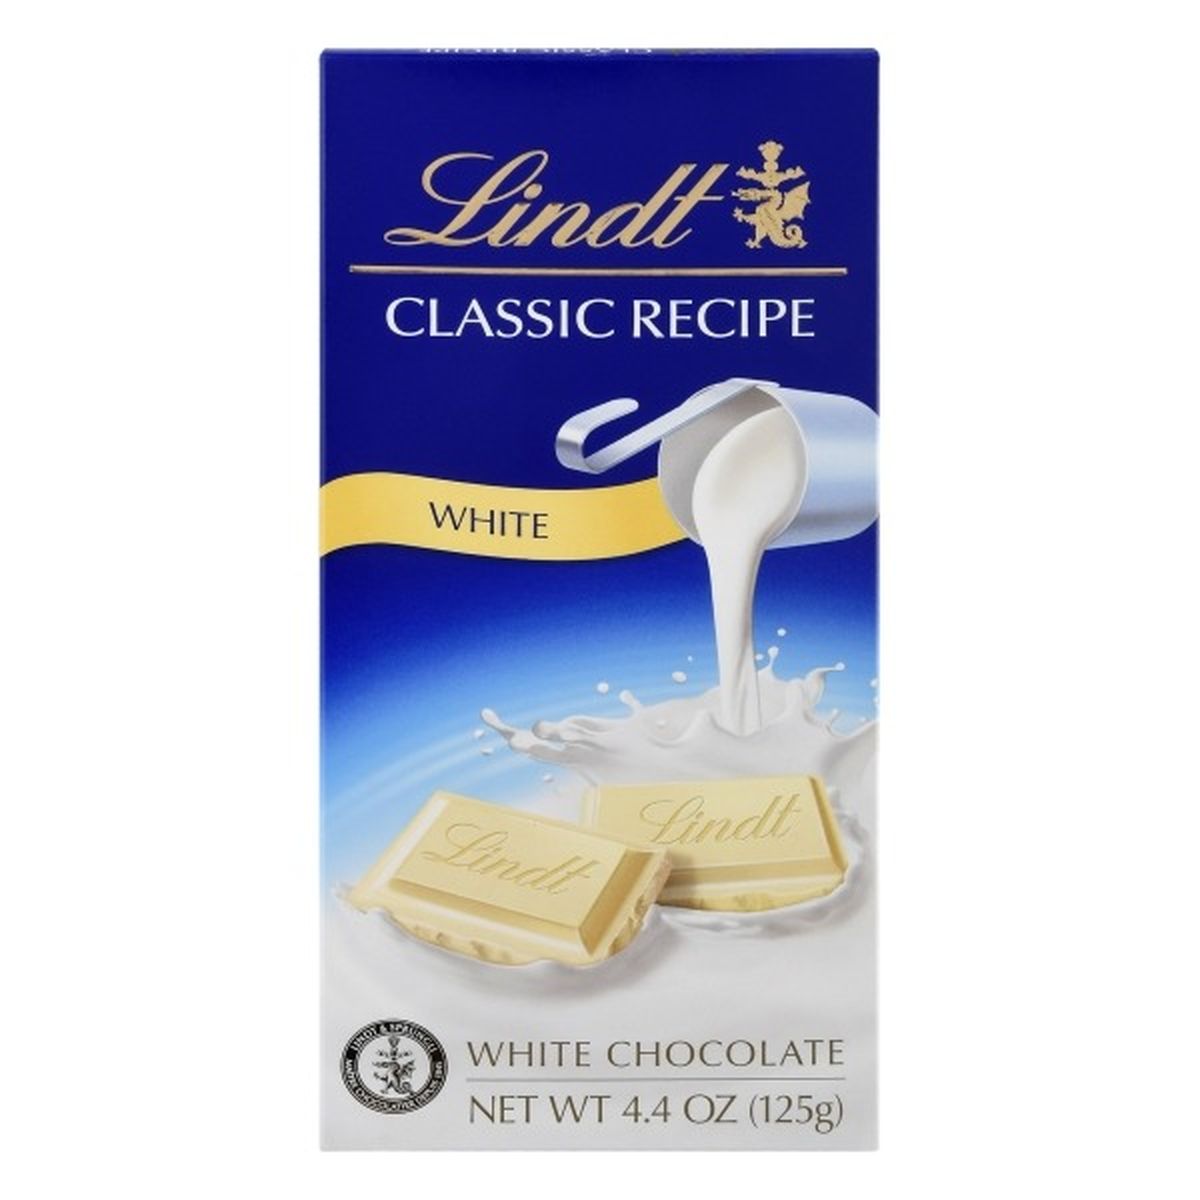 Calories in Lindt Classic Recipe White Chocolate Bar